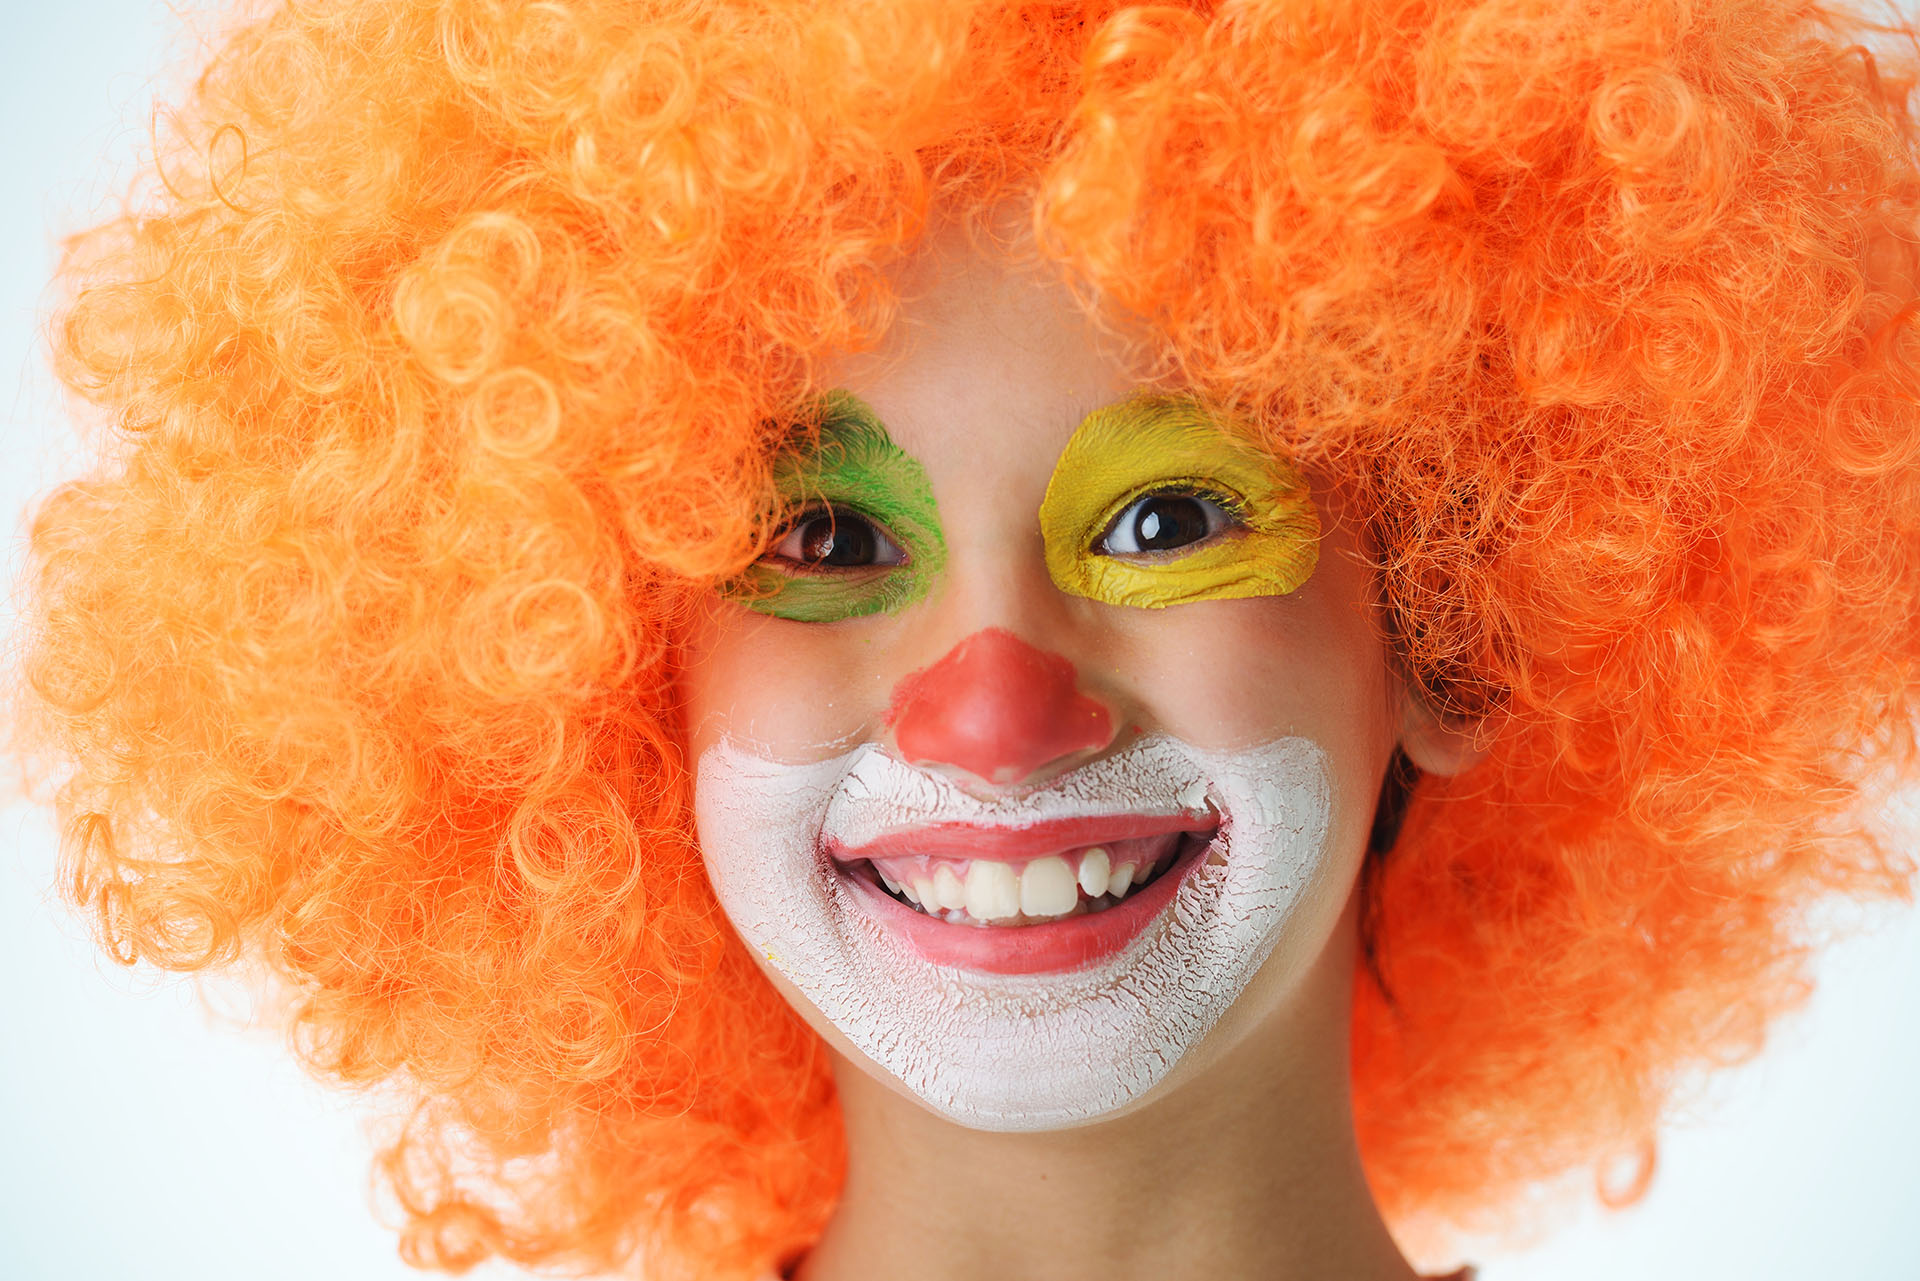 Portrait of happy funny clown kid